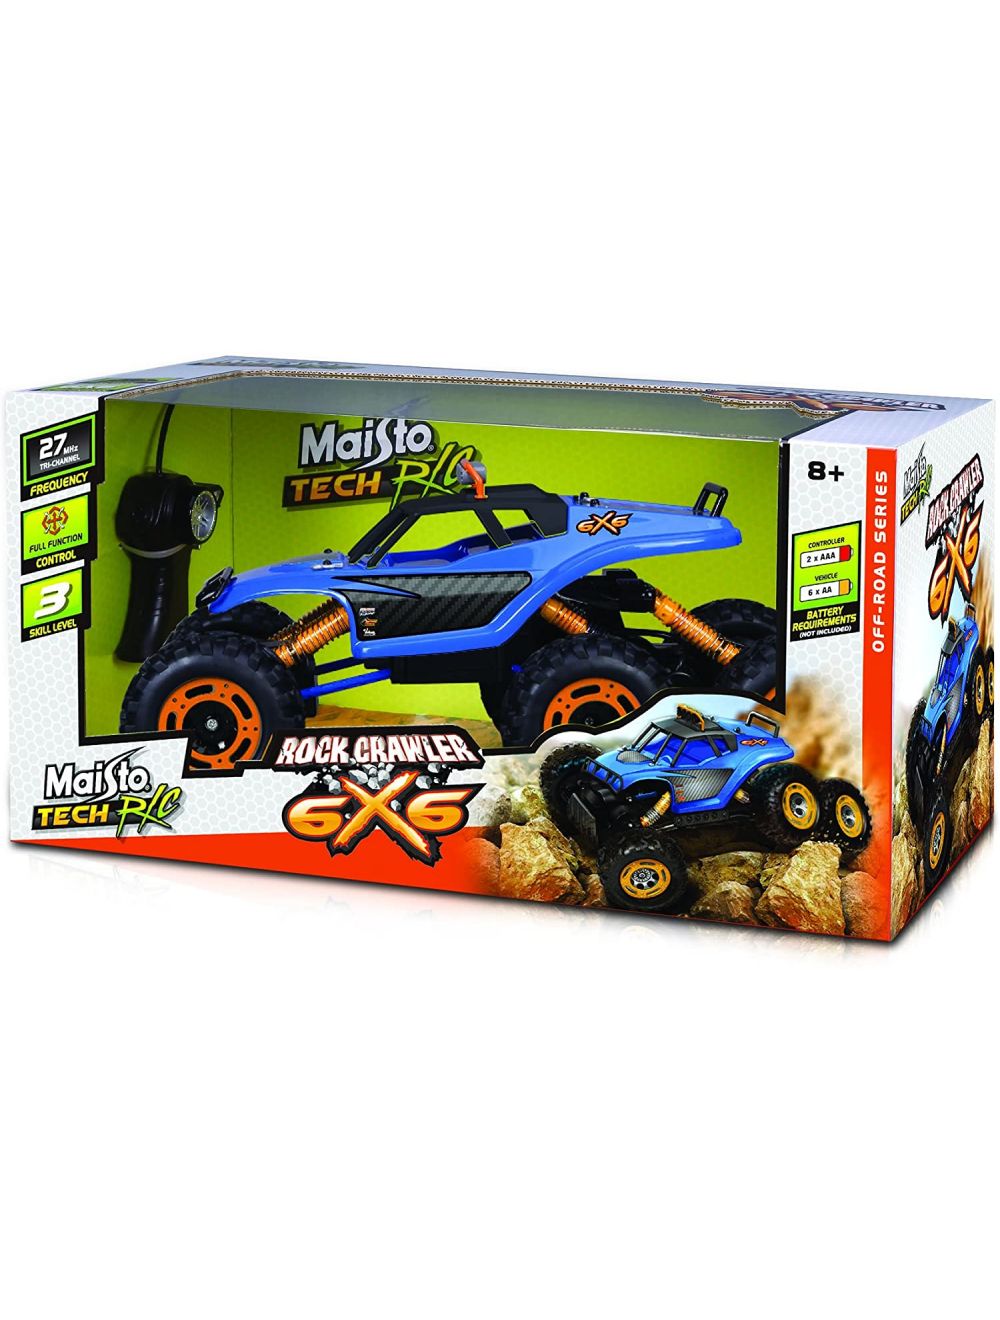 Maisto R/C Rock Crawler 6 X 6 (Colors May Vary) Vehicle